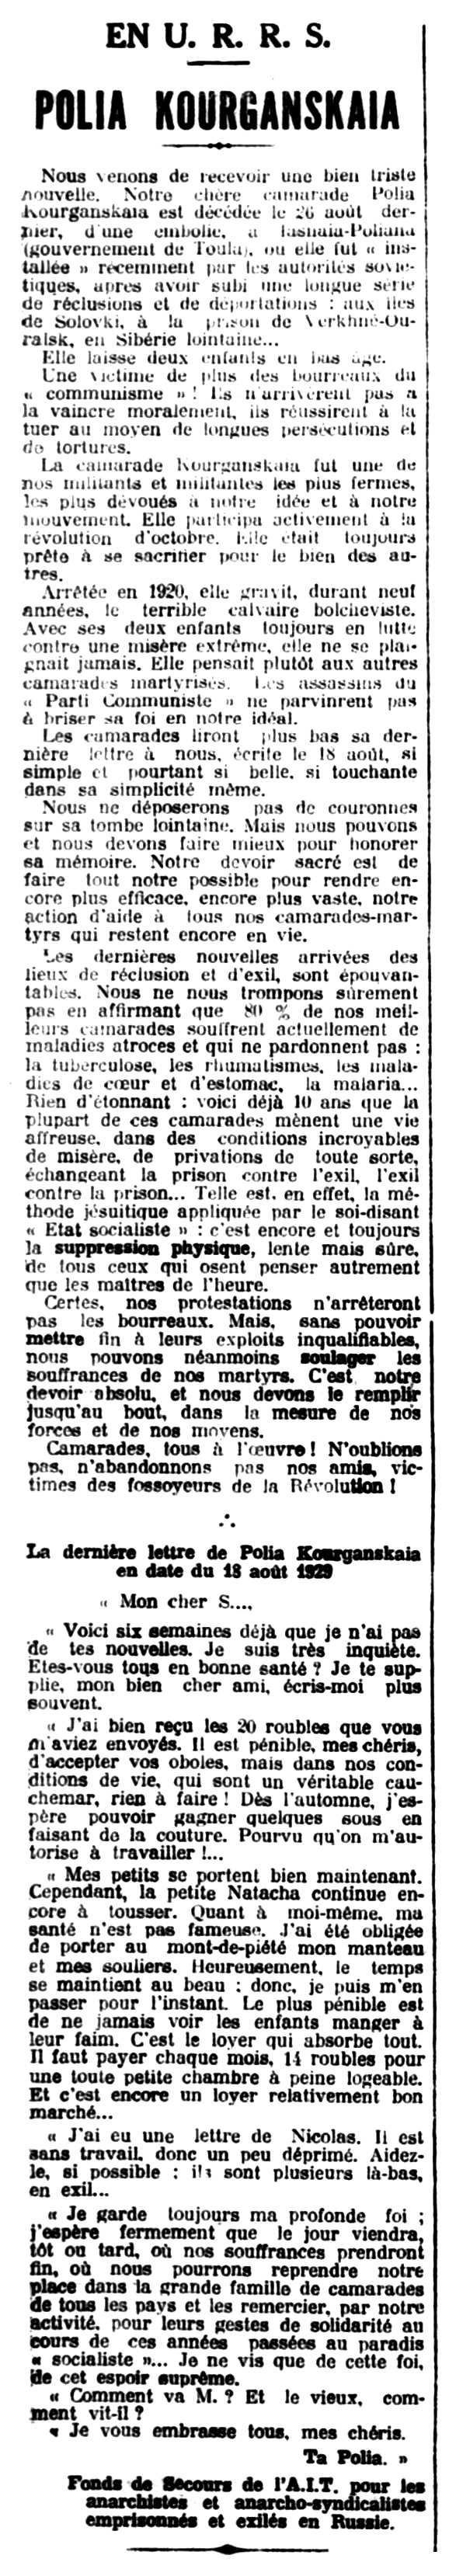 Necrològica de Polina Kourganskaia apareguda en el periòdic parisenc "Le Libertaire" del 28 de setembre de 1929